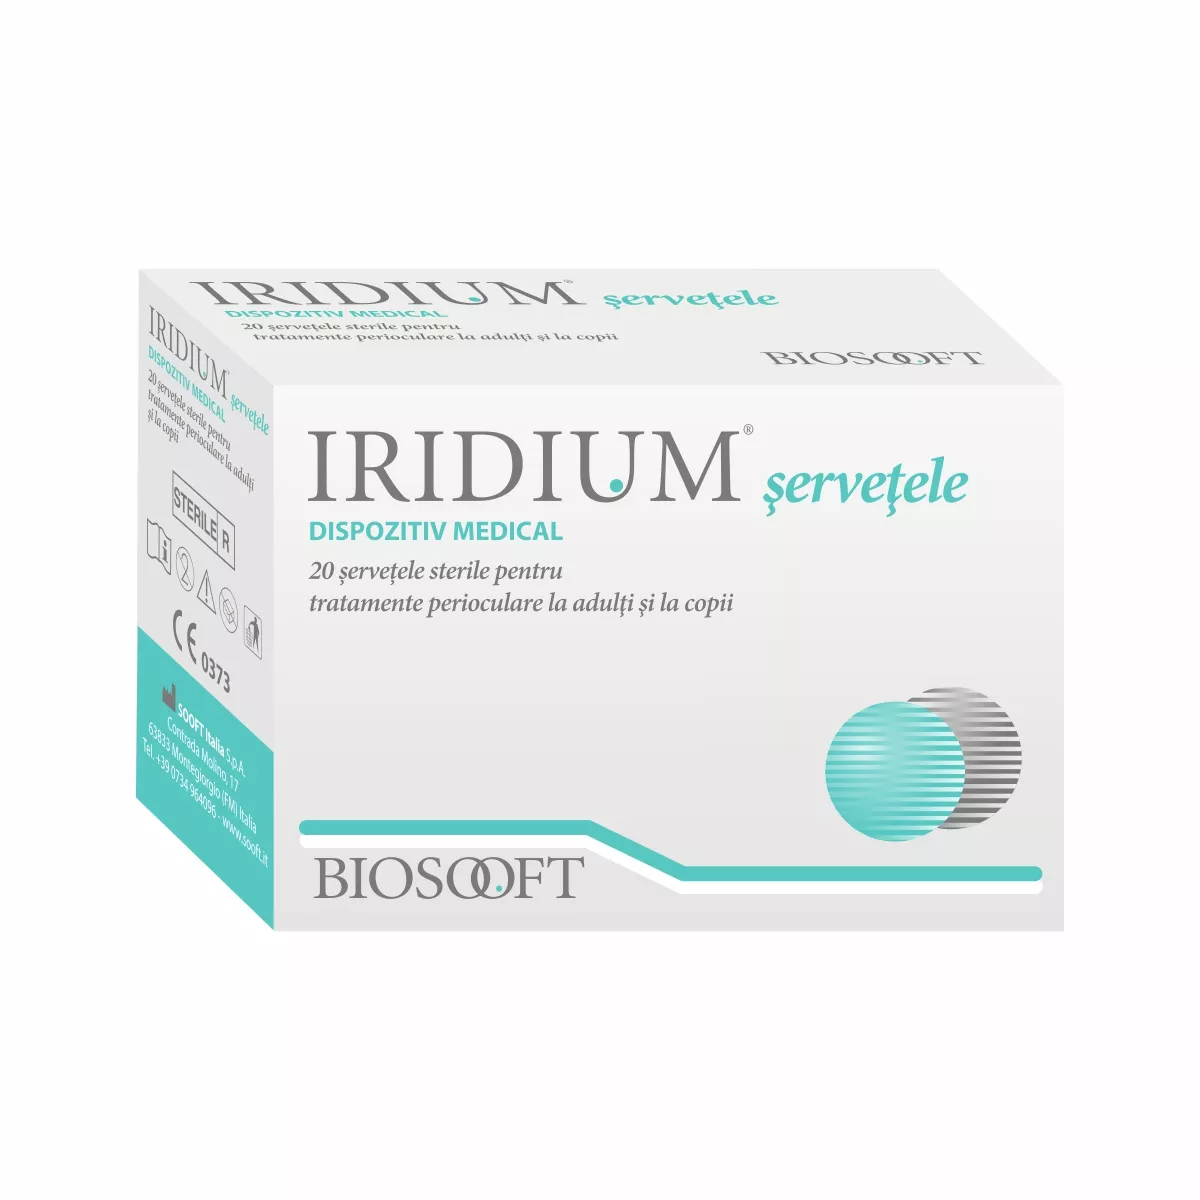 Iridium servetele sterile igiena perioculara, 20 bucati, BioSooft, [],remediumfarm.ro